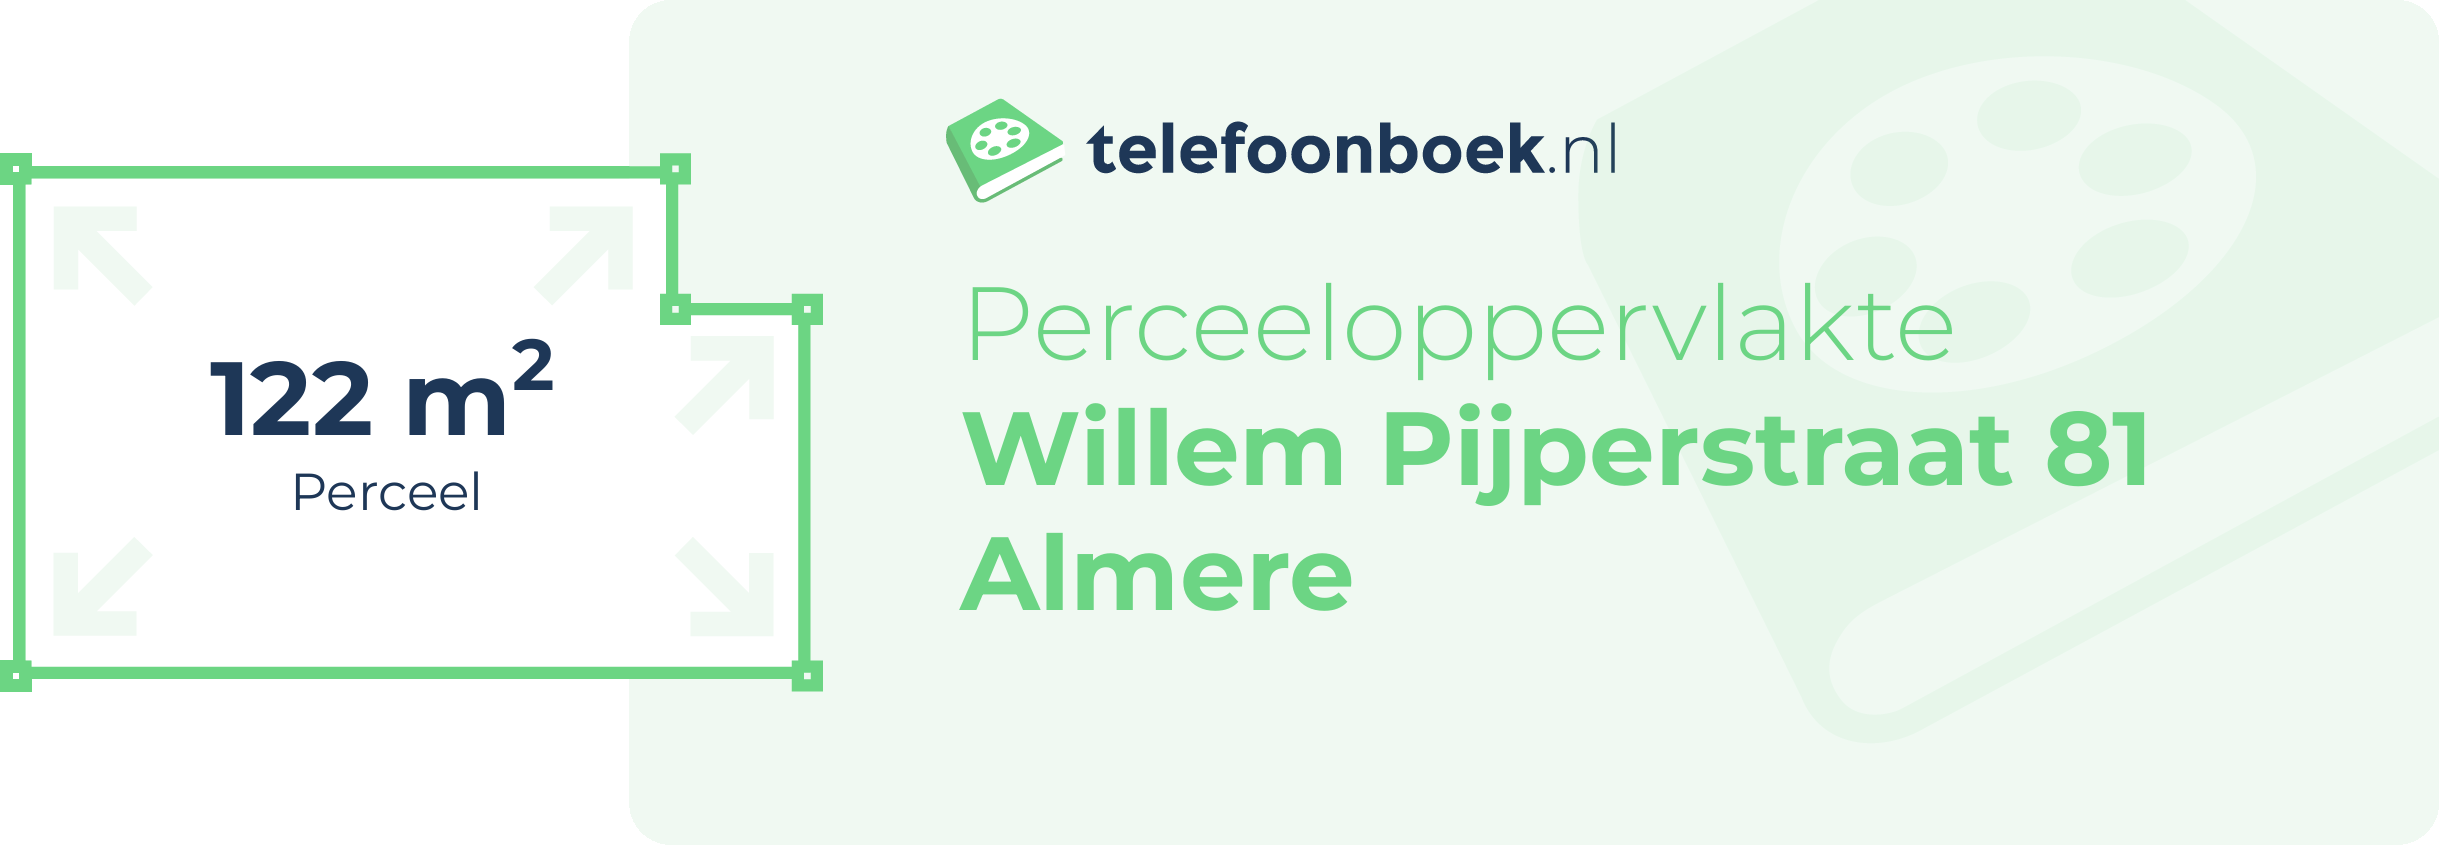 Perceeloppervlakte Willem Pijperstraat 81 Almere